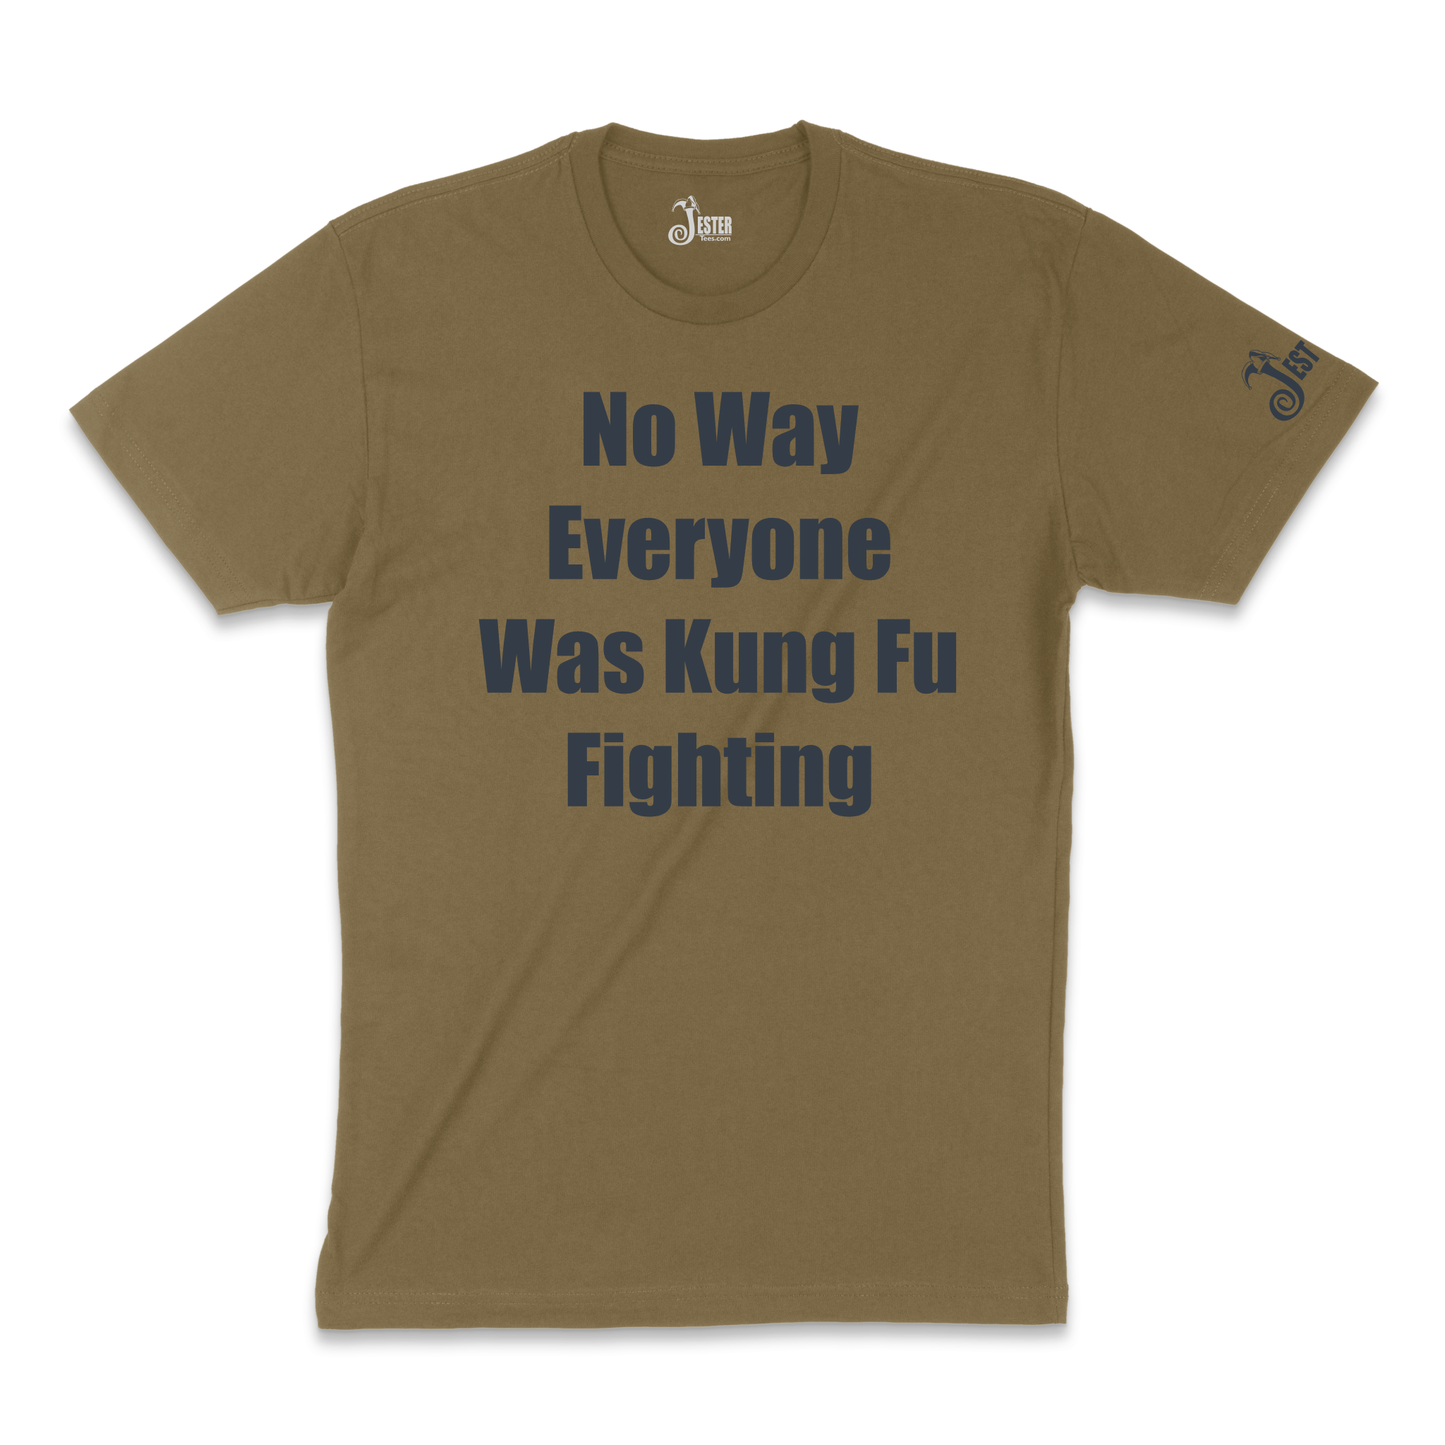 No Way Everyone Was Kung Fu Fighting Funny Shirt